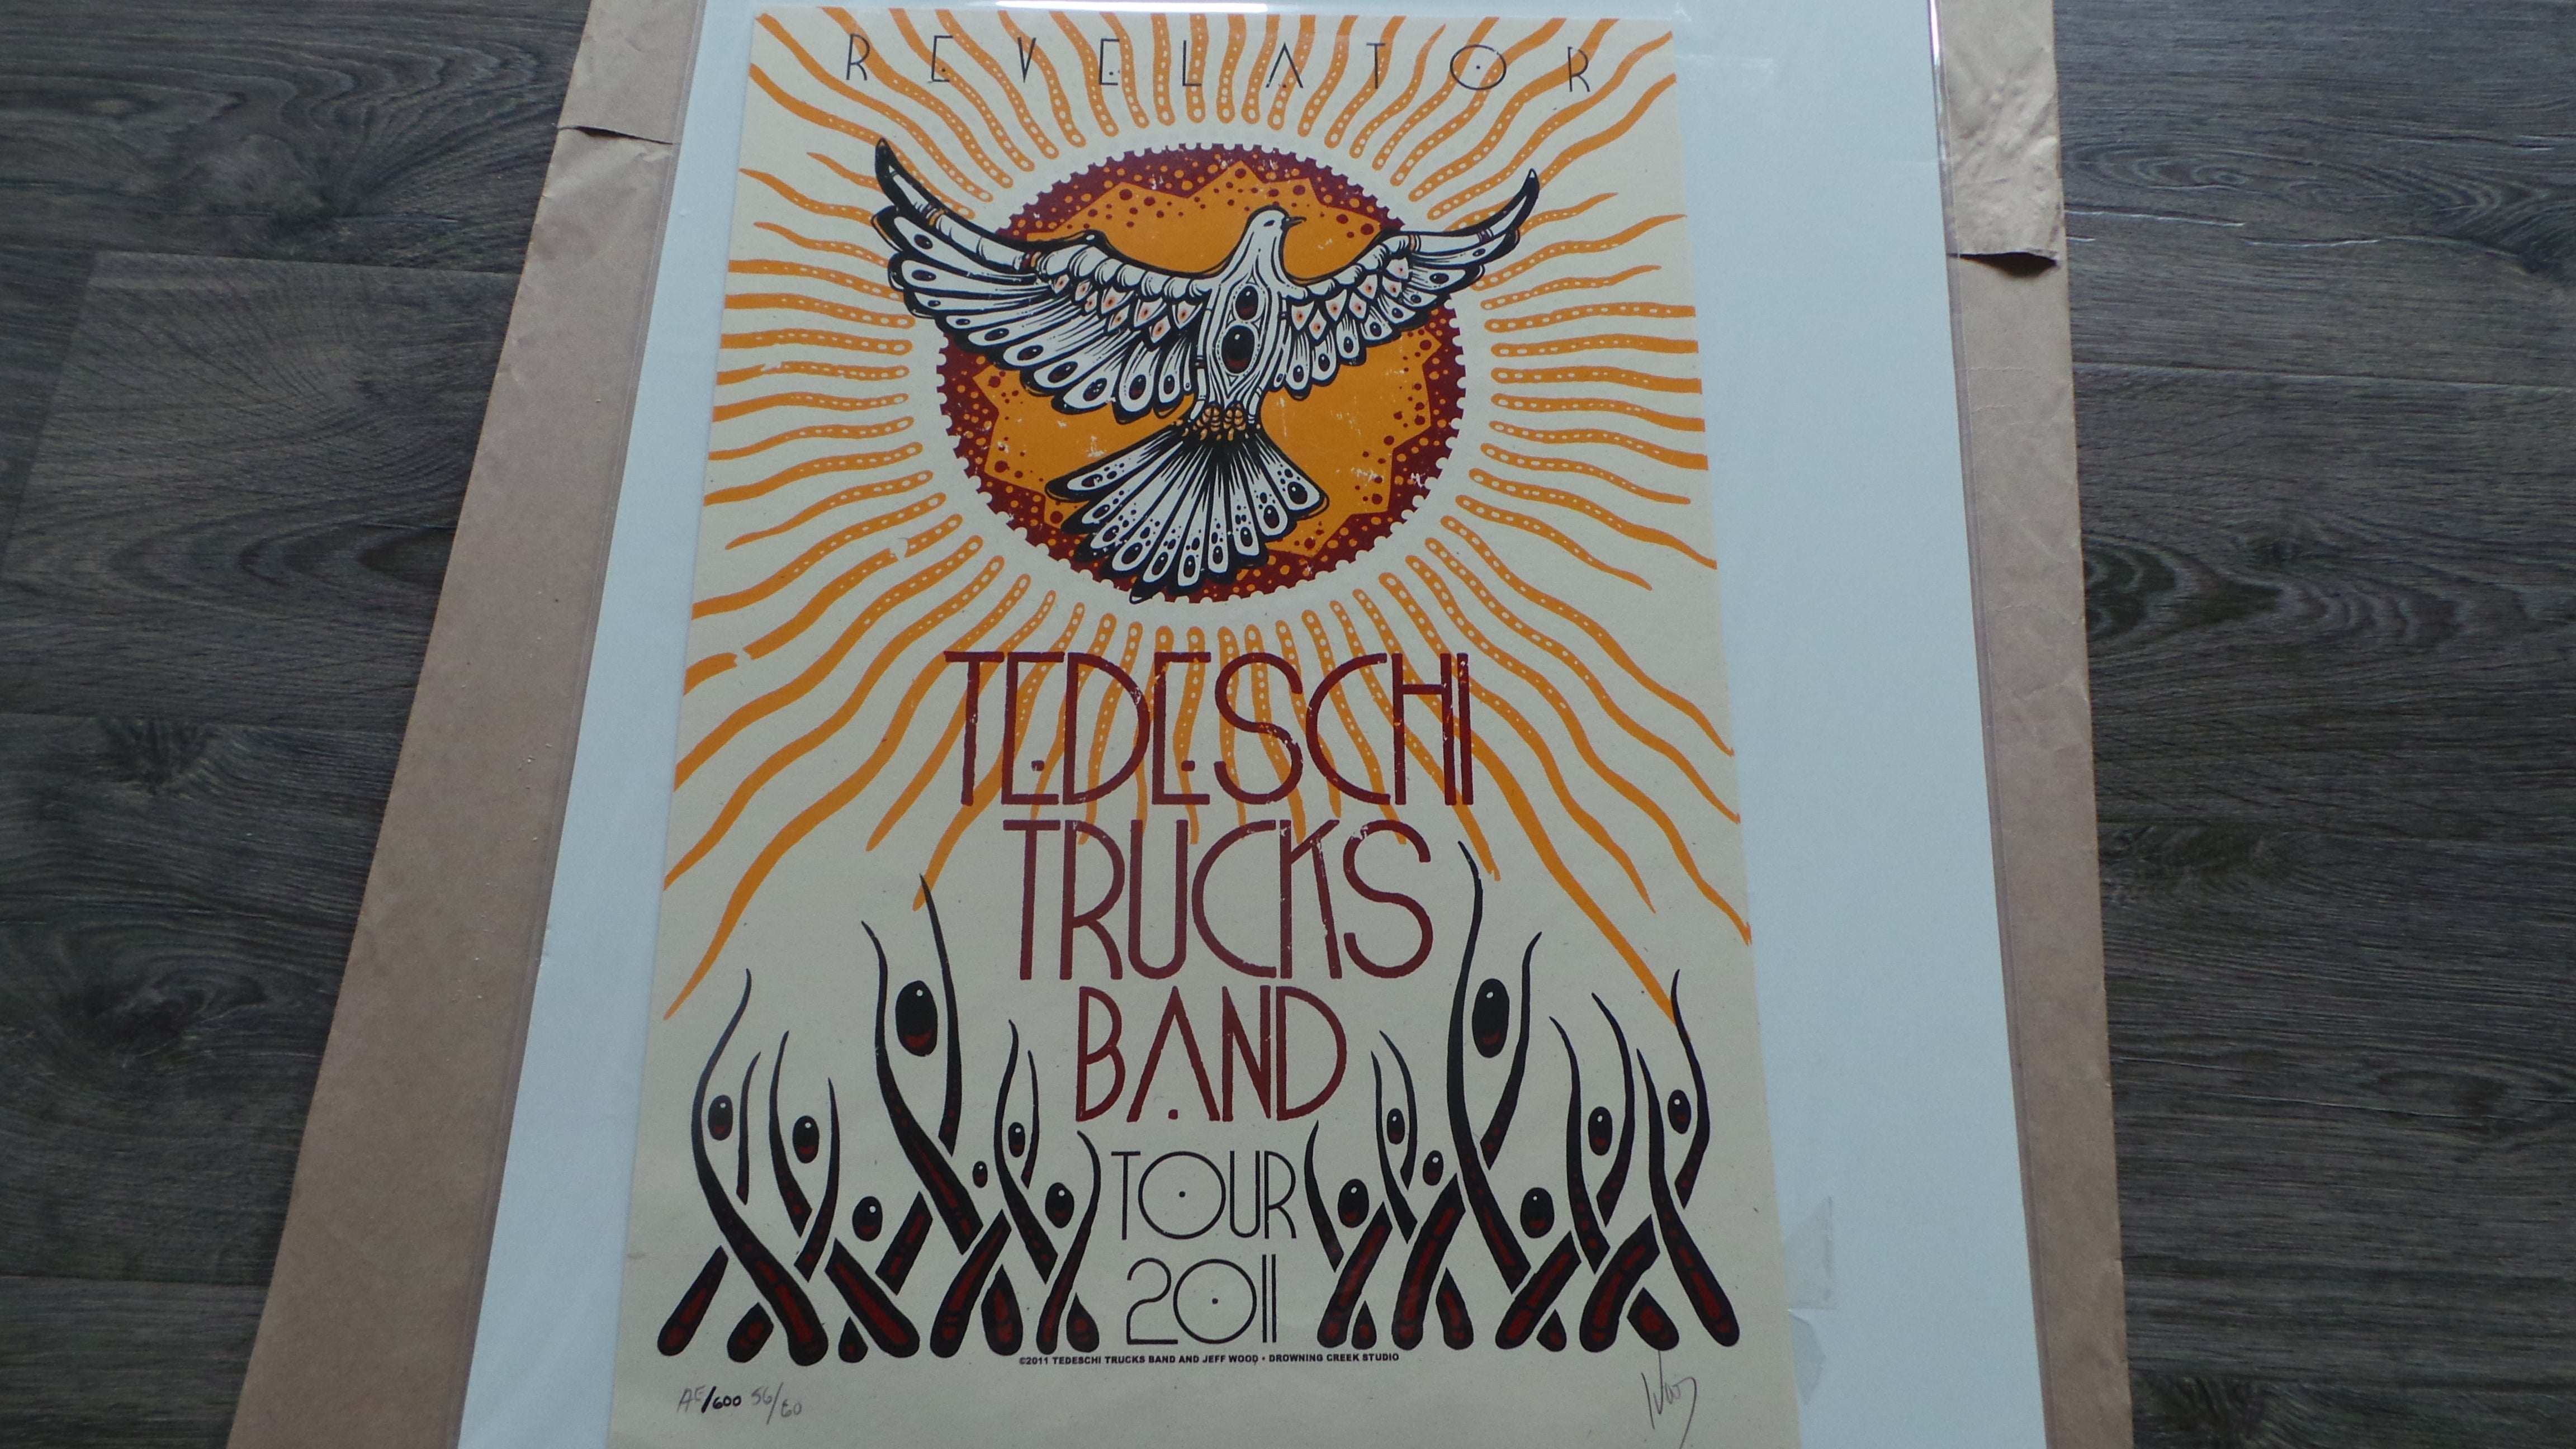 Jeff Wood - Tedeschi Trucks Band Revelator Tour Poster - 2011 - S/N'd